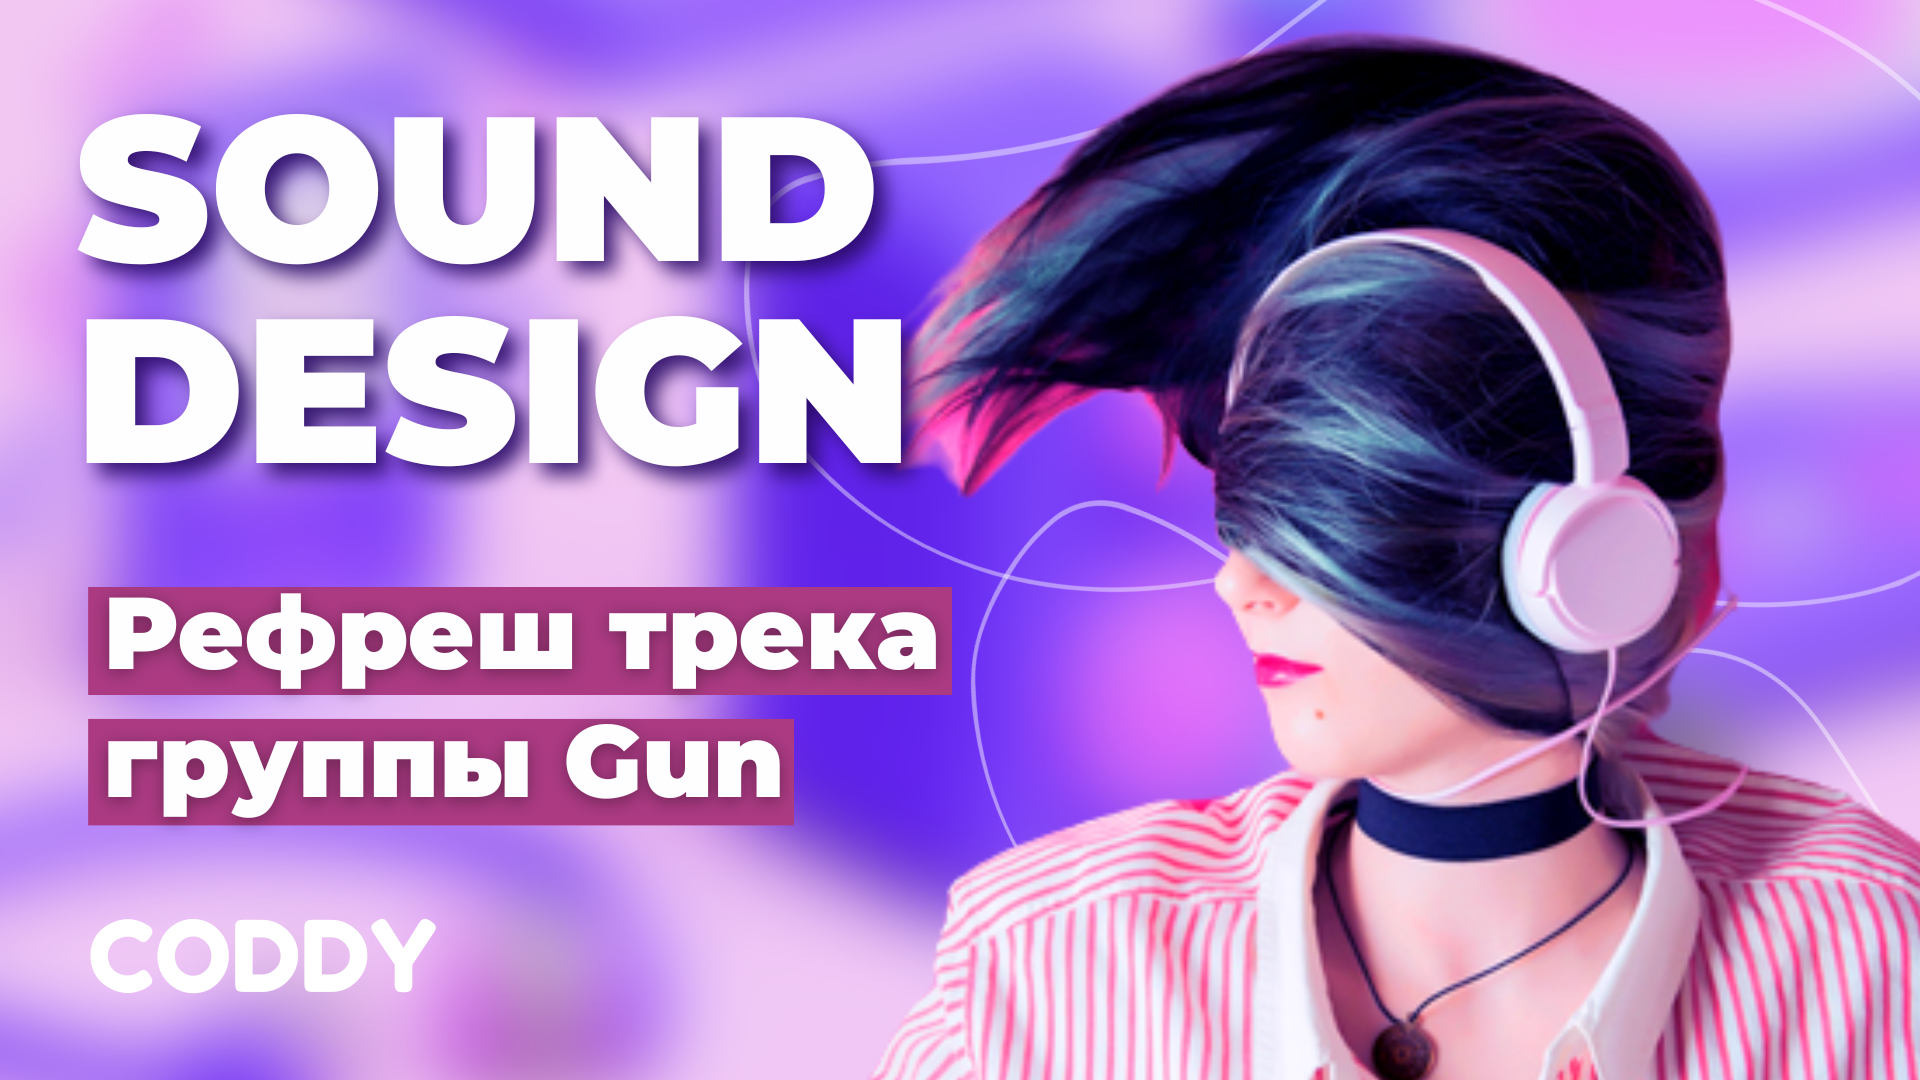 Sound Design: рефреш трека группы Gun